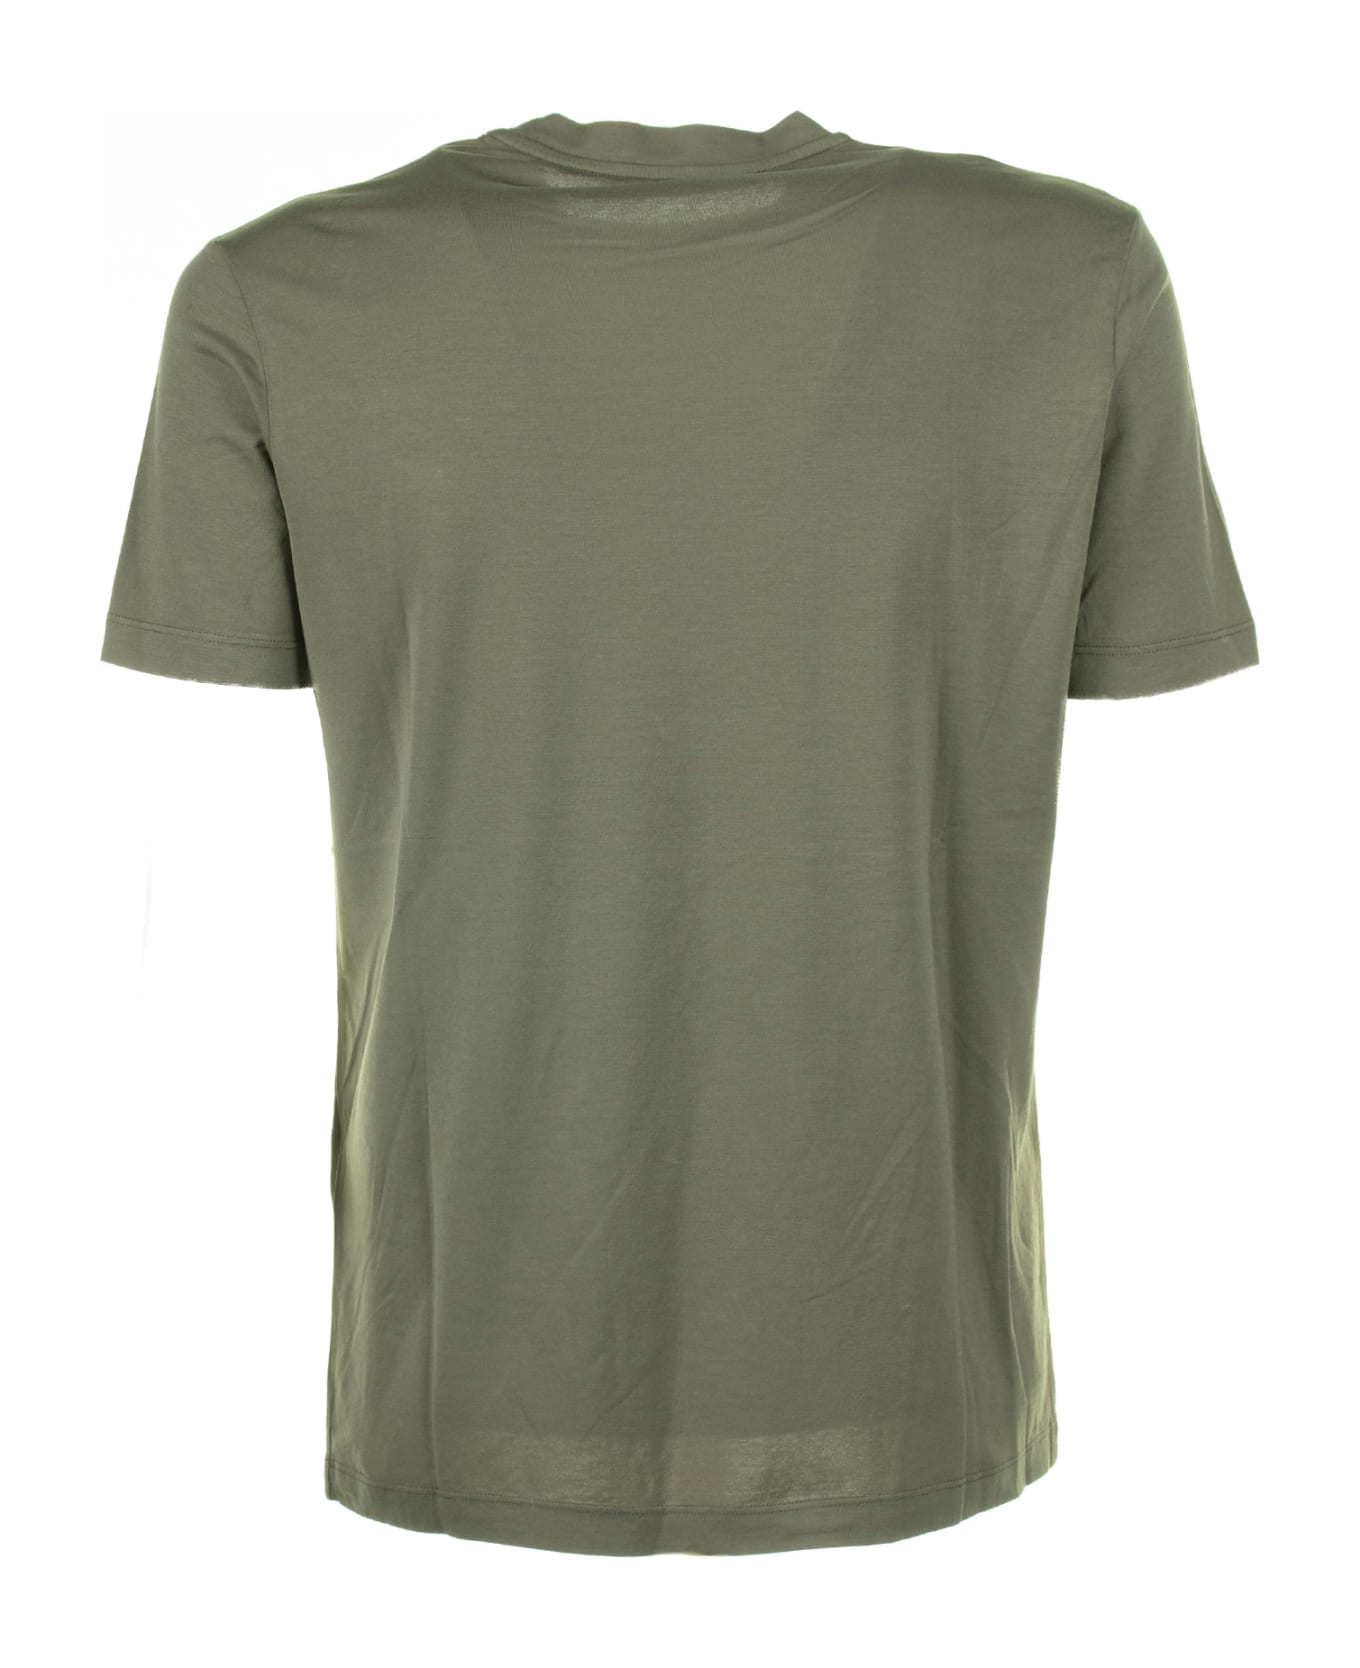 Altea Military Green Cotton T-shirt - MILITARE シャツ